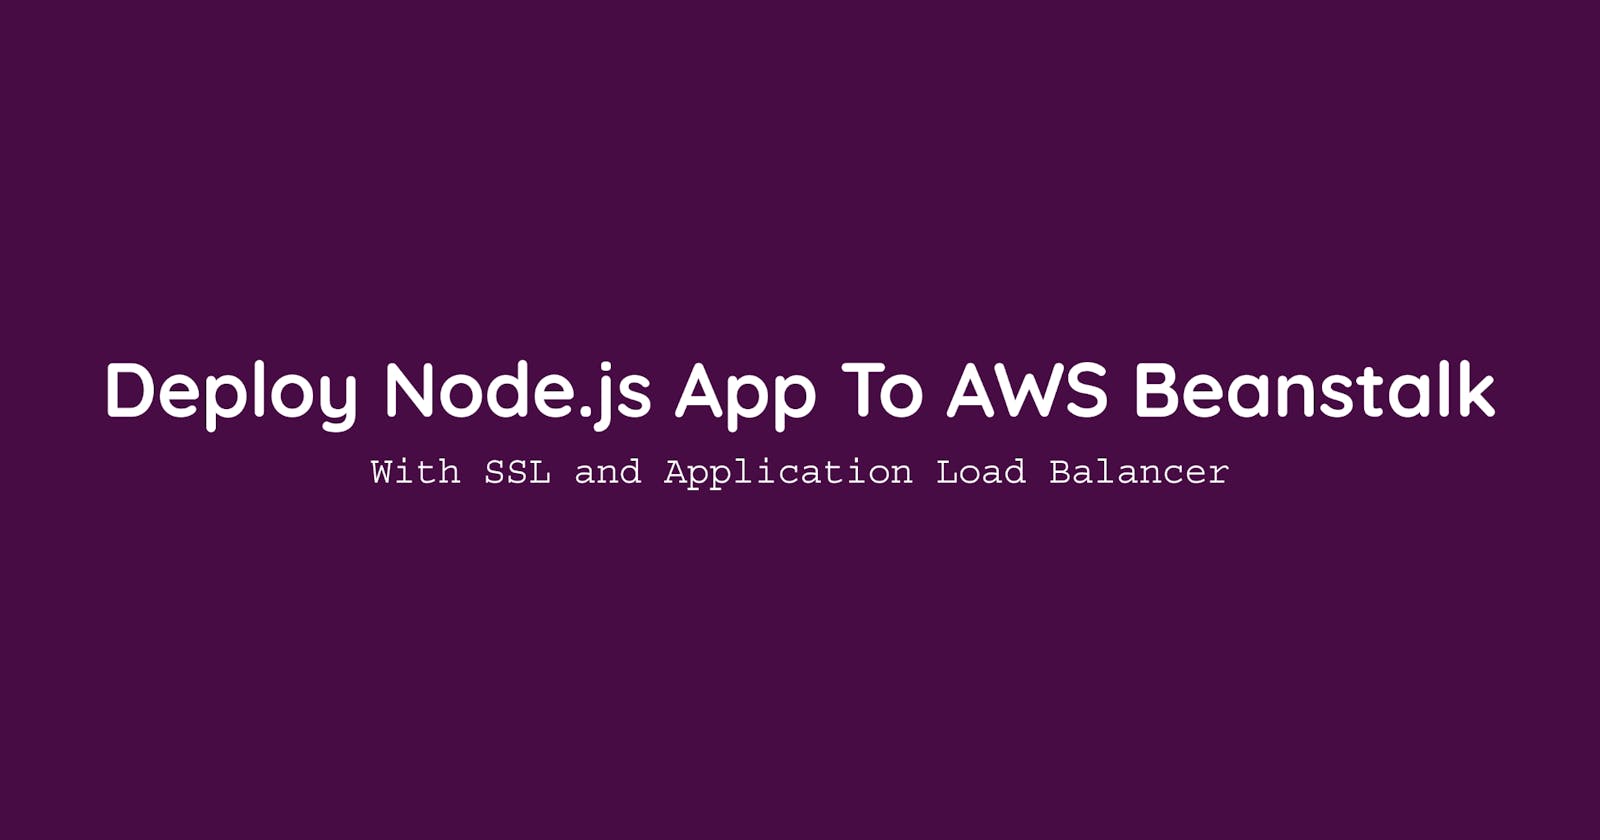 Deploy Node.js Application To AWS Beanstalk With SSL and Load Balancer